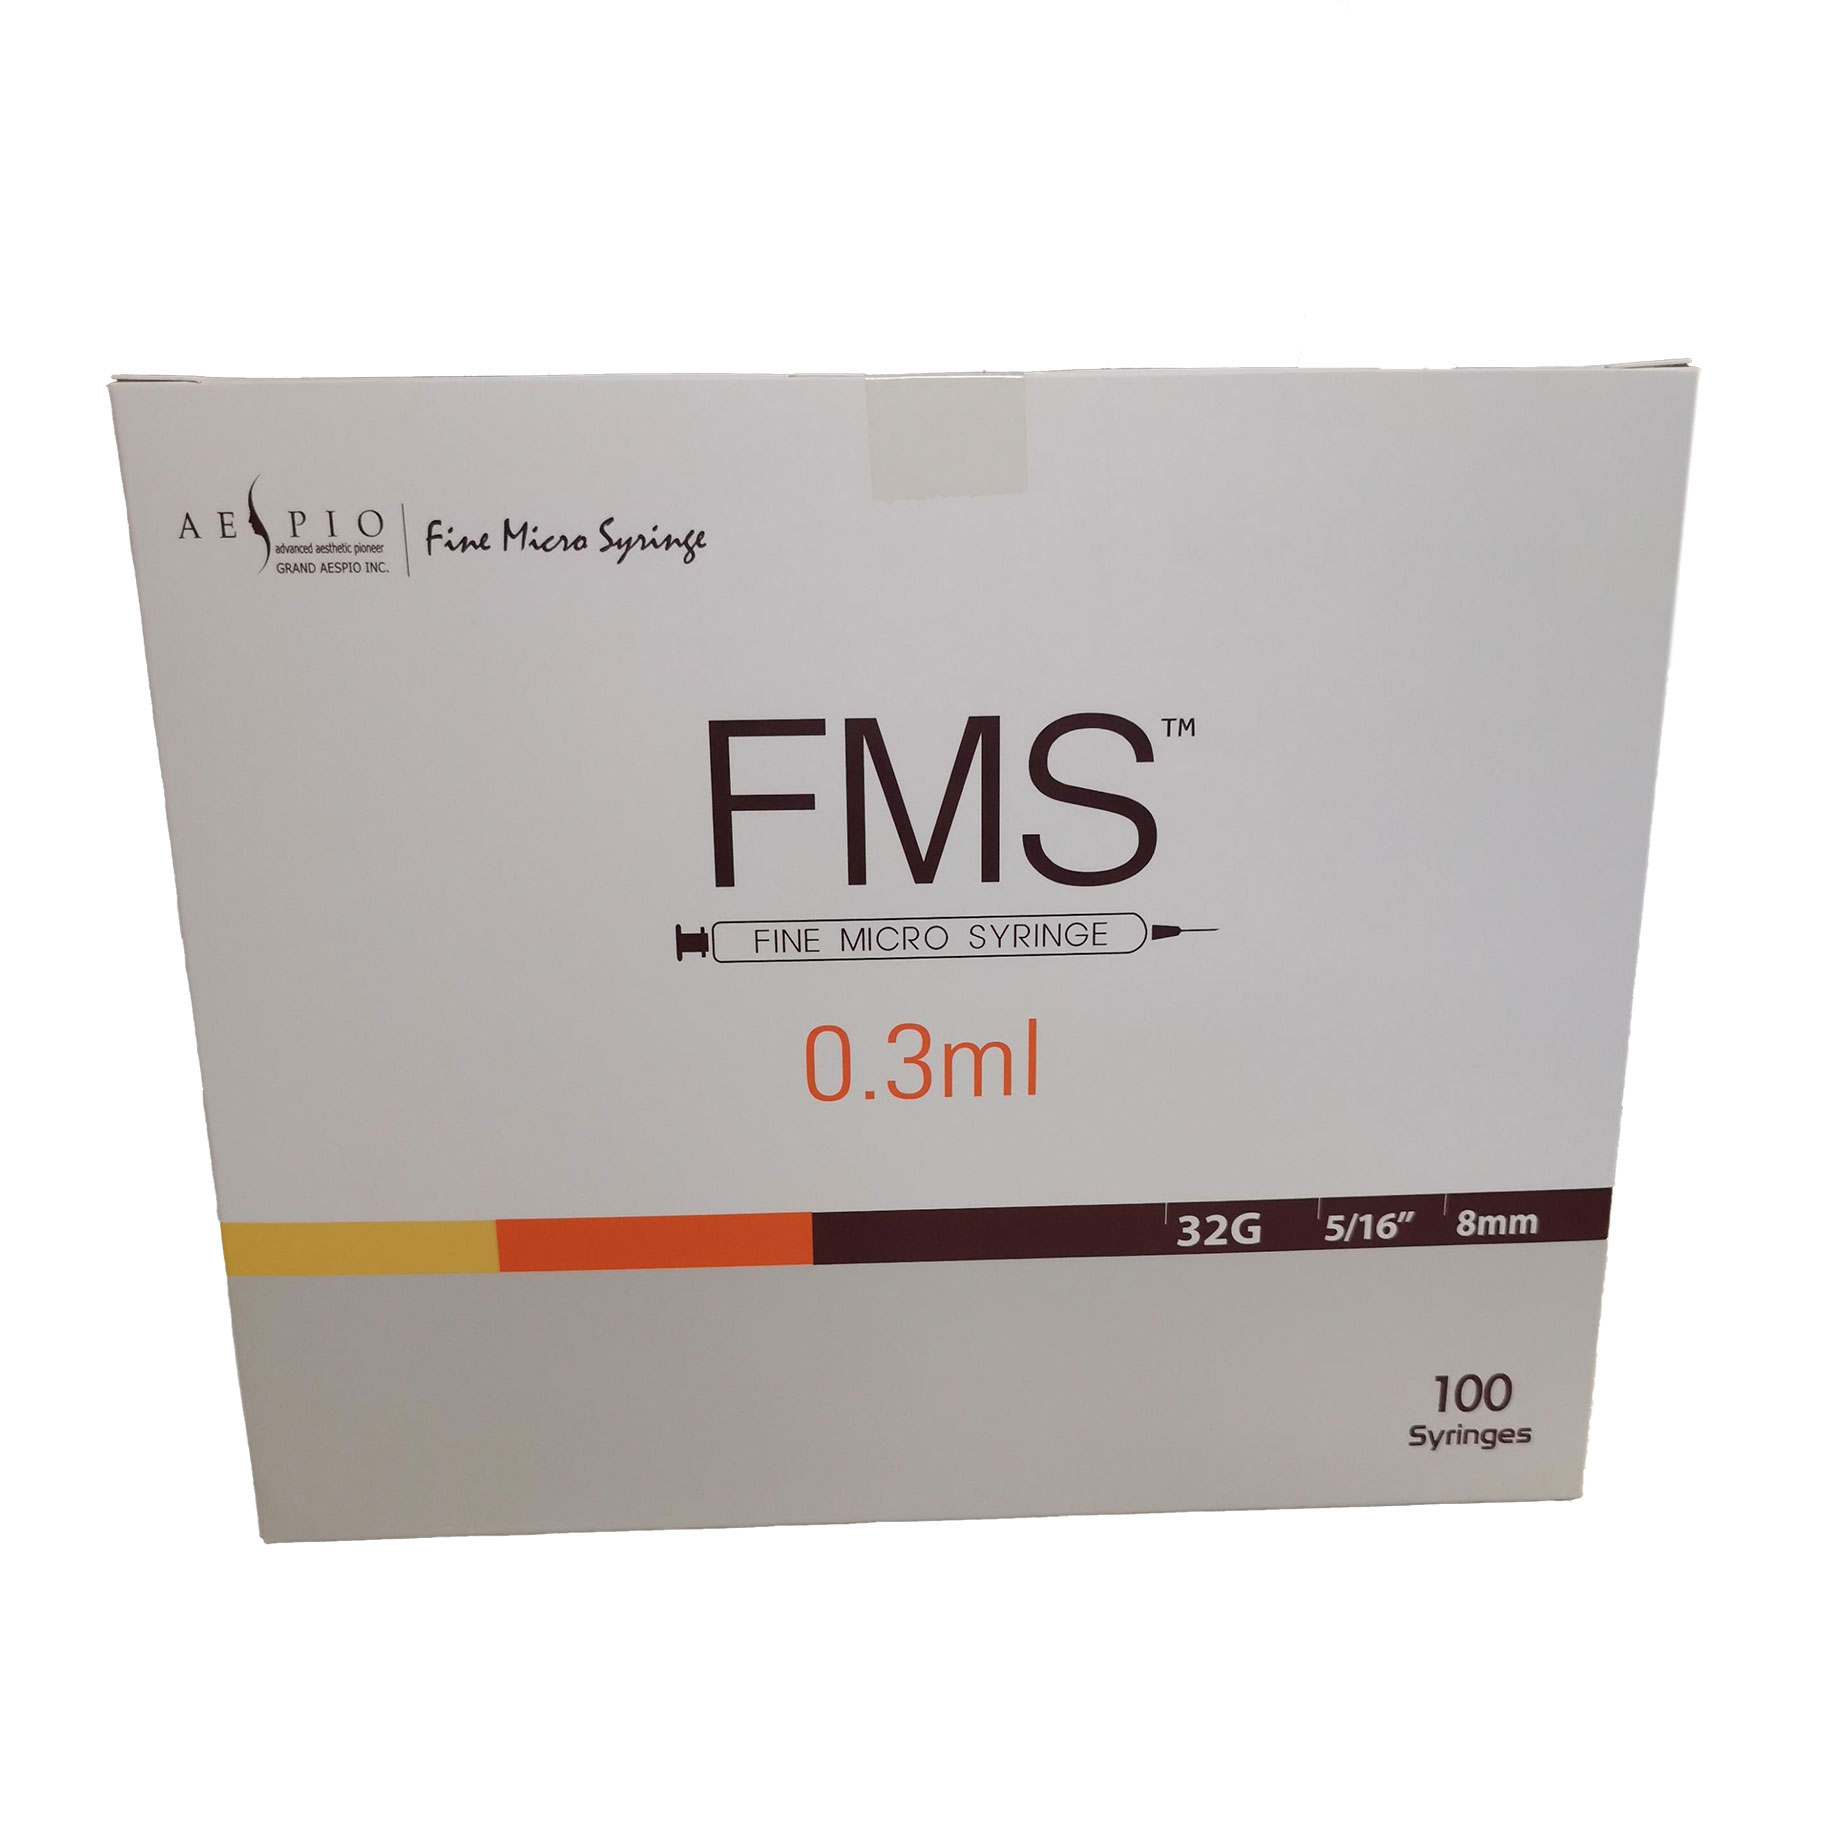 FMS Micro Syringe 32G Fine, 8mm, 0.3ml 